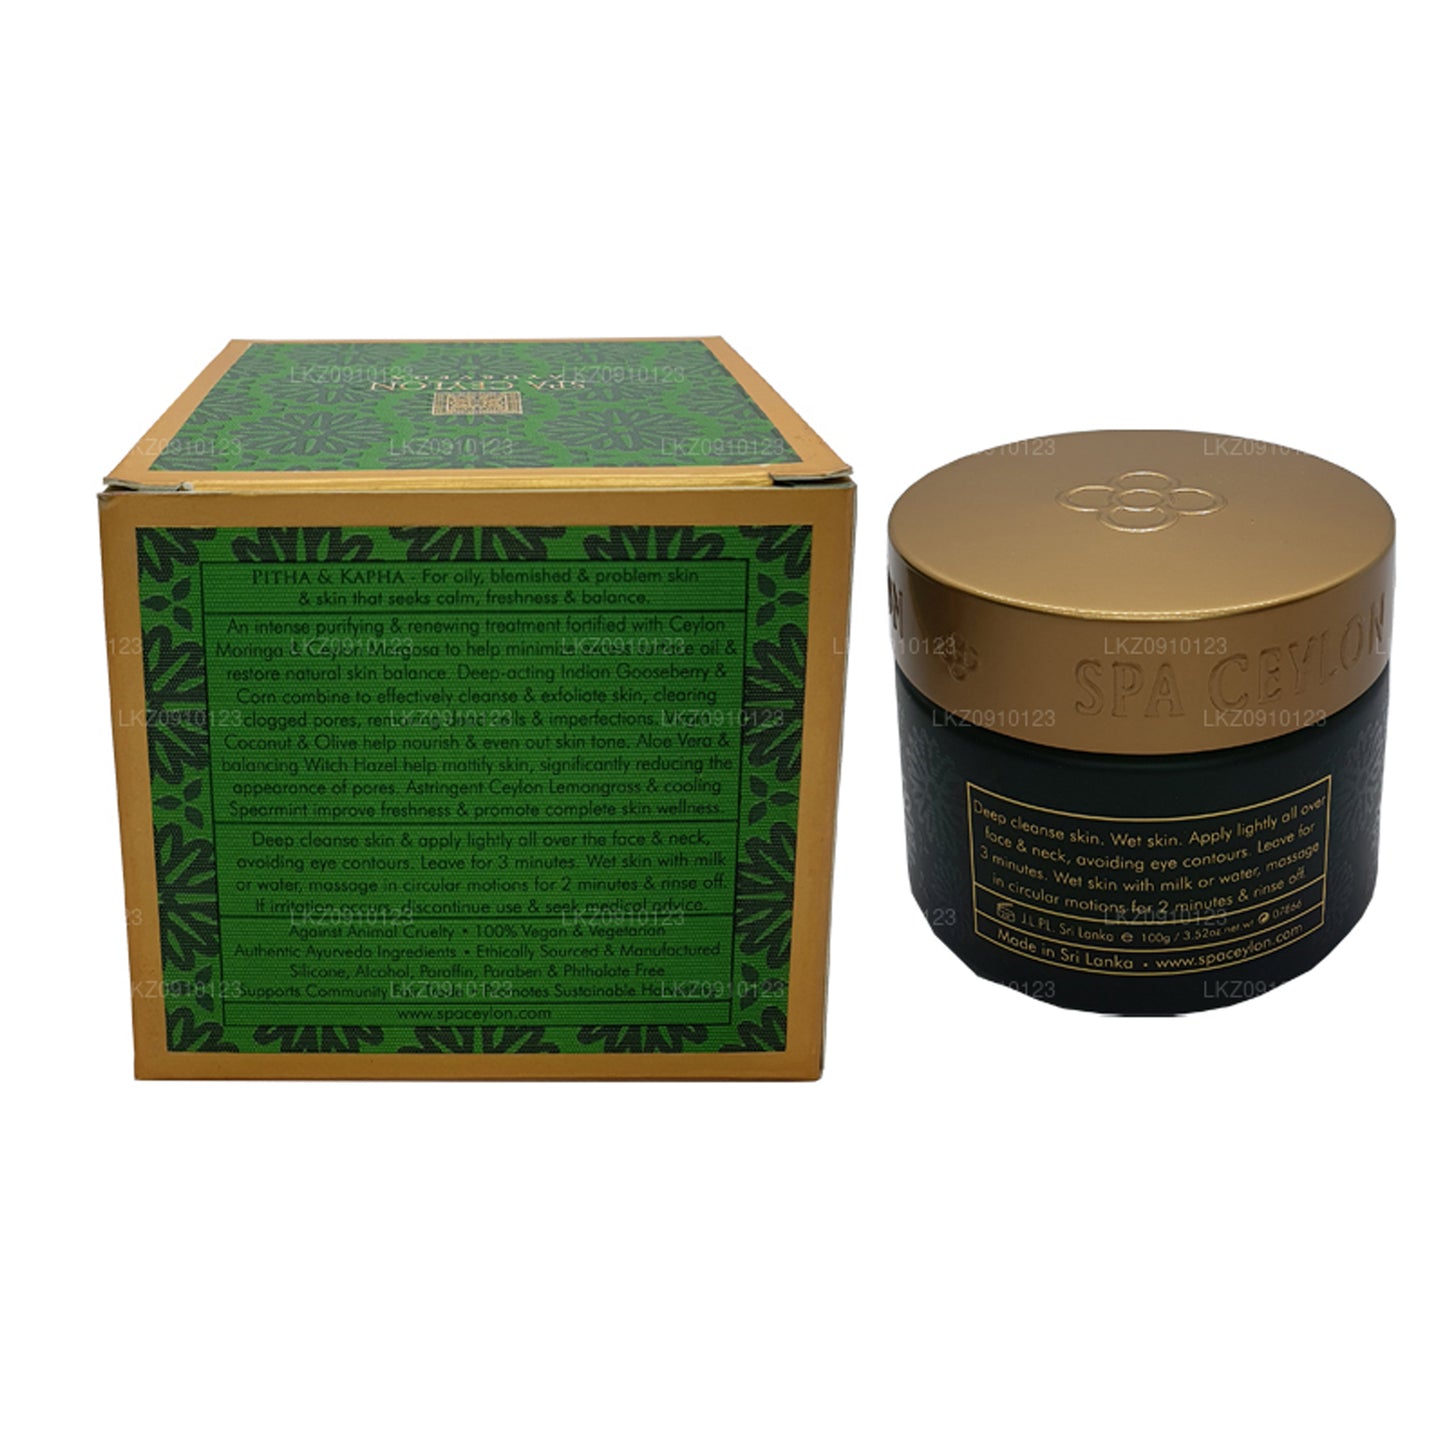 Spa Ceylon Skin Balance Moringa and Neem Clarifying Clay Facial Exfoliator (100g)